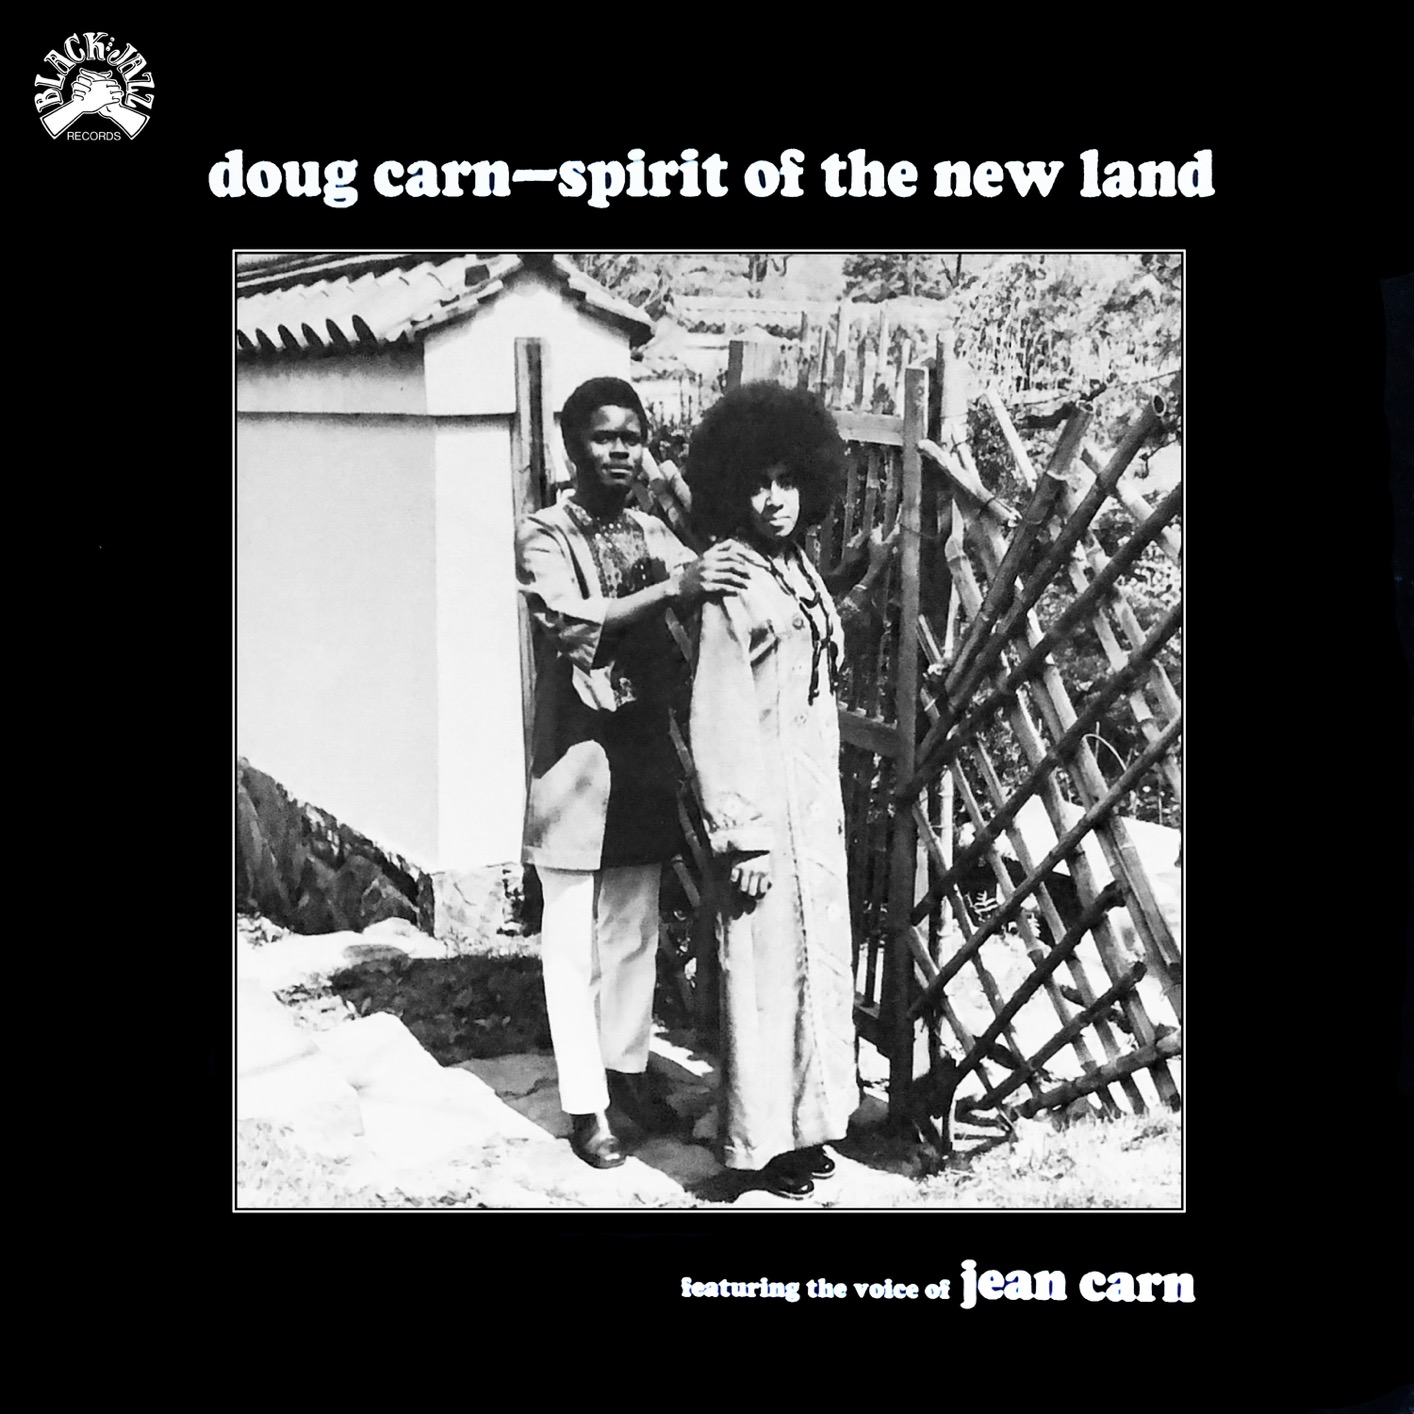 Doug Carn - Spirit of the New Land (Remastered) (1972/2020) [FLAC 24bit/96kHz]